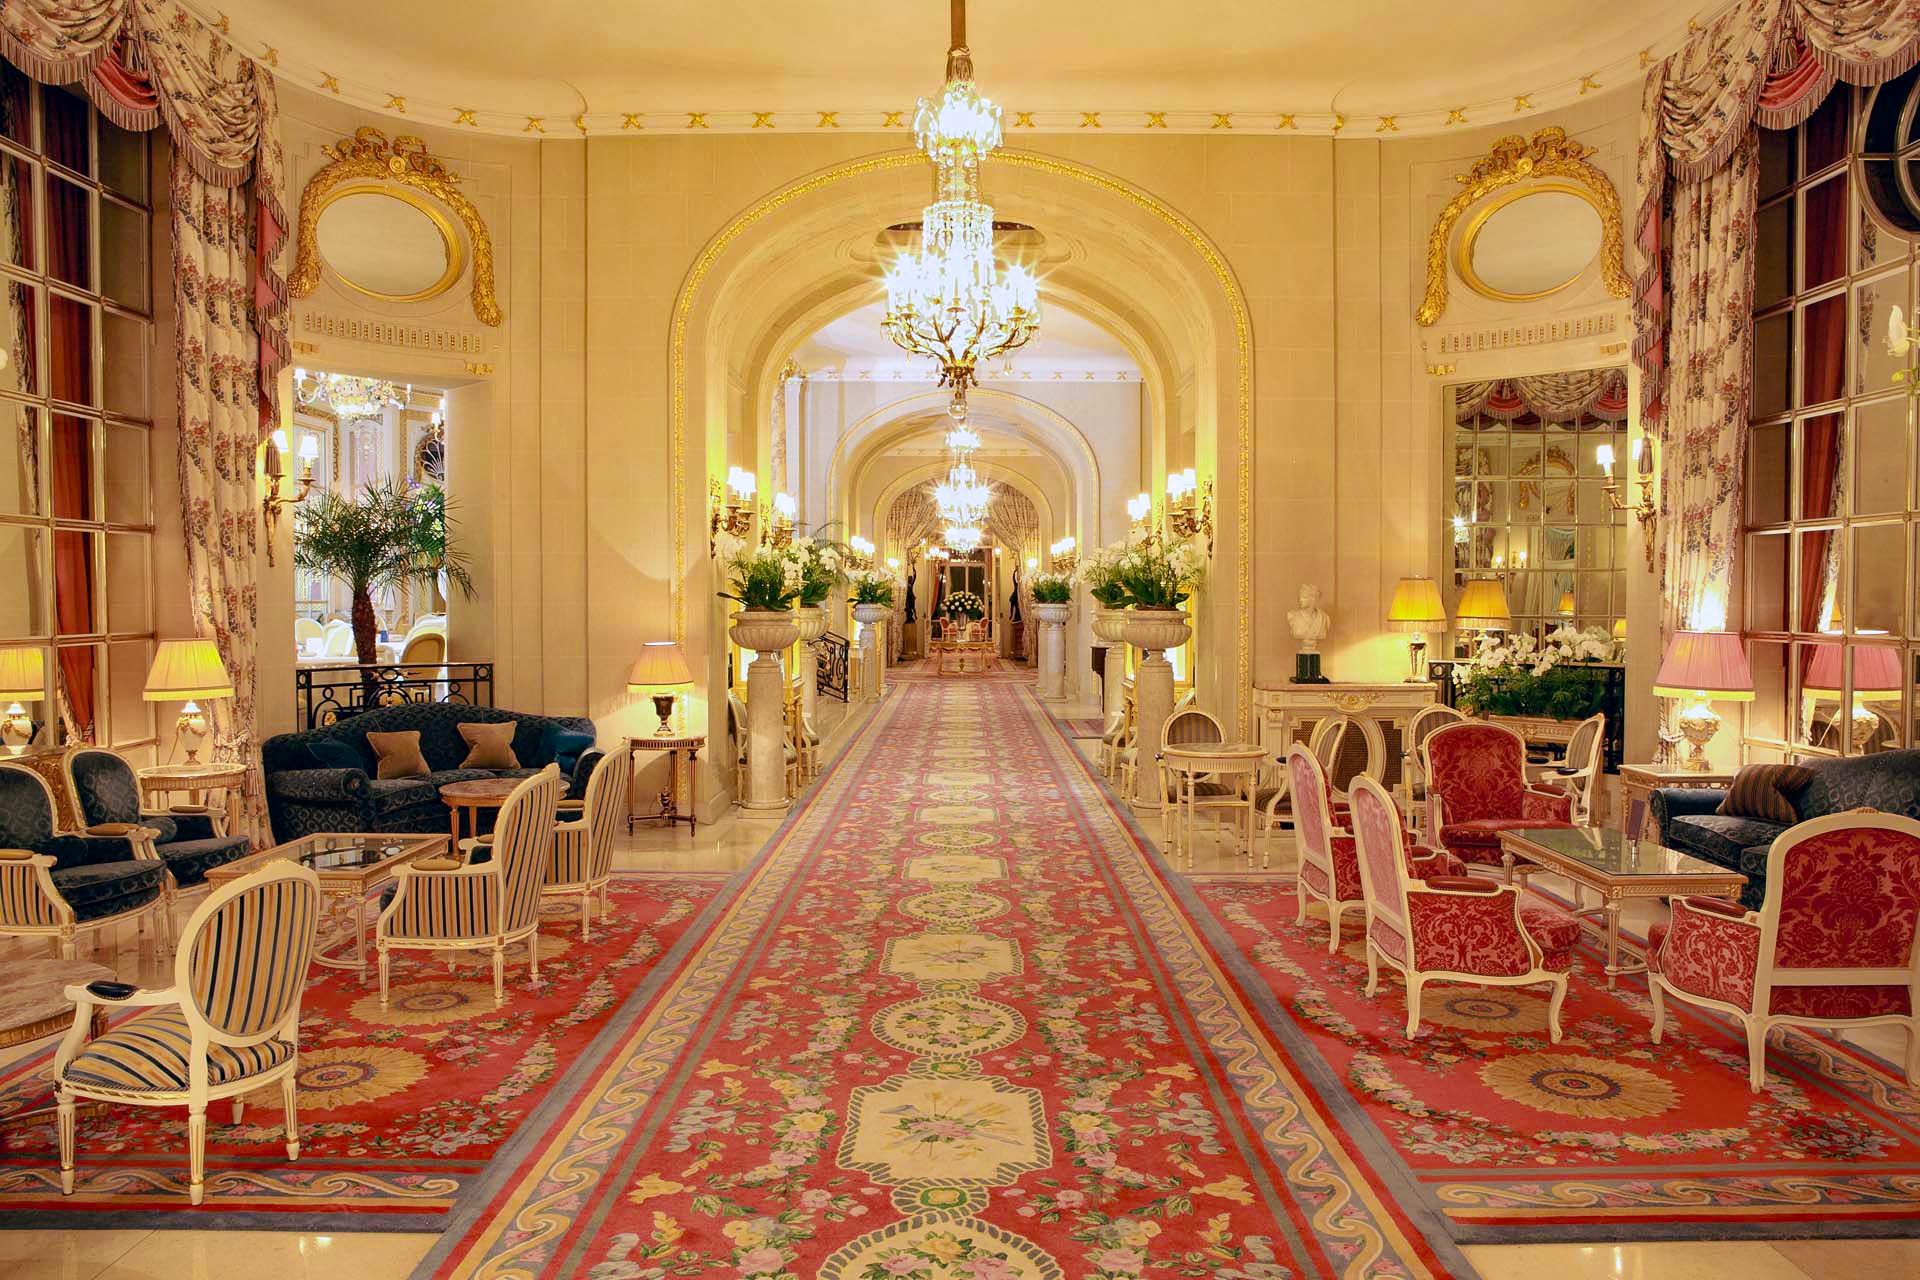 The royal treatment: London’s The Ritz Hotel